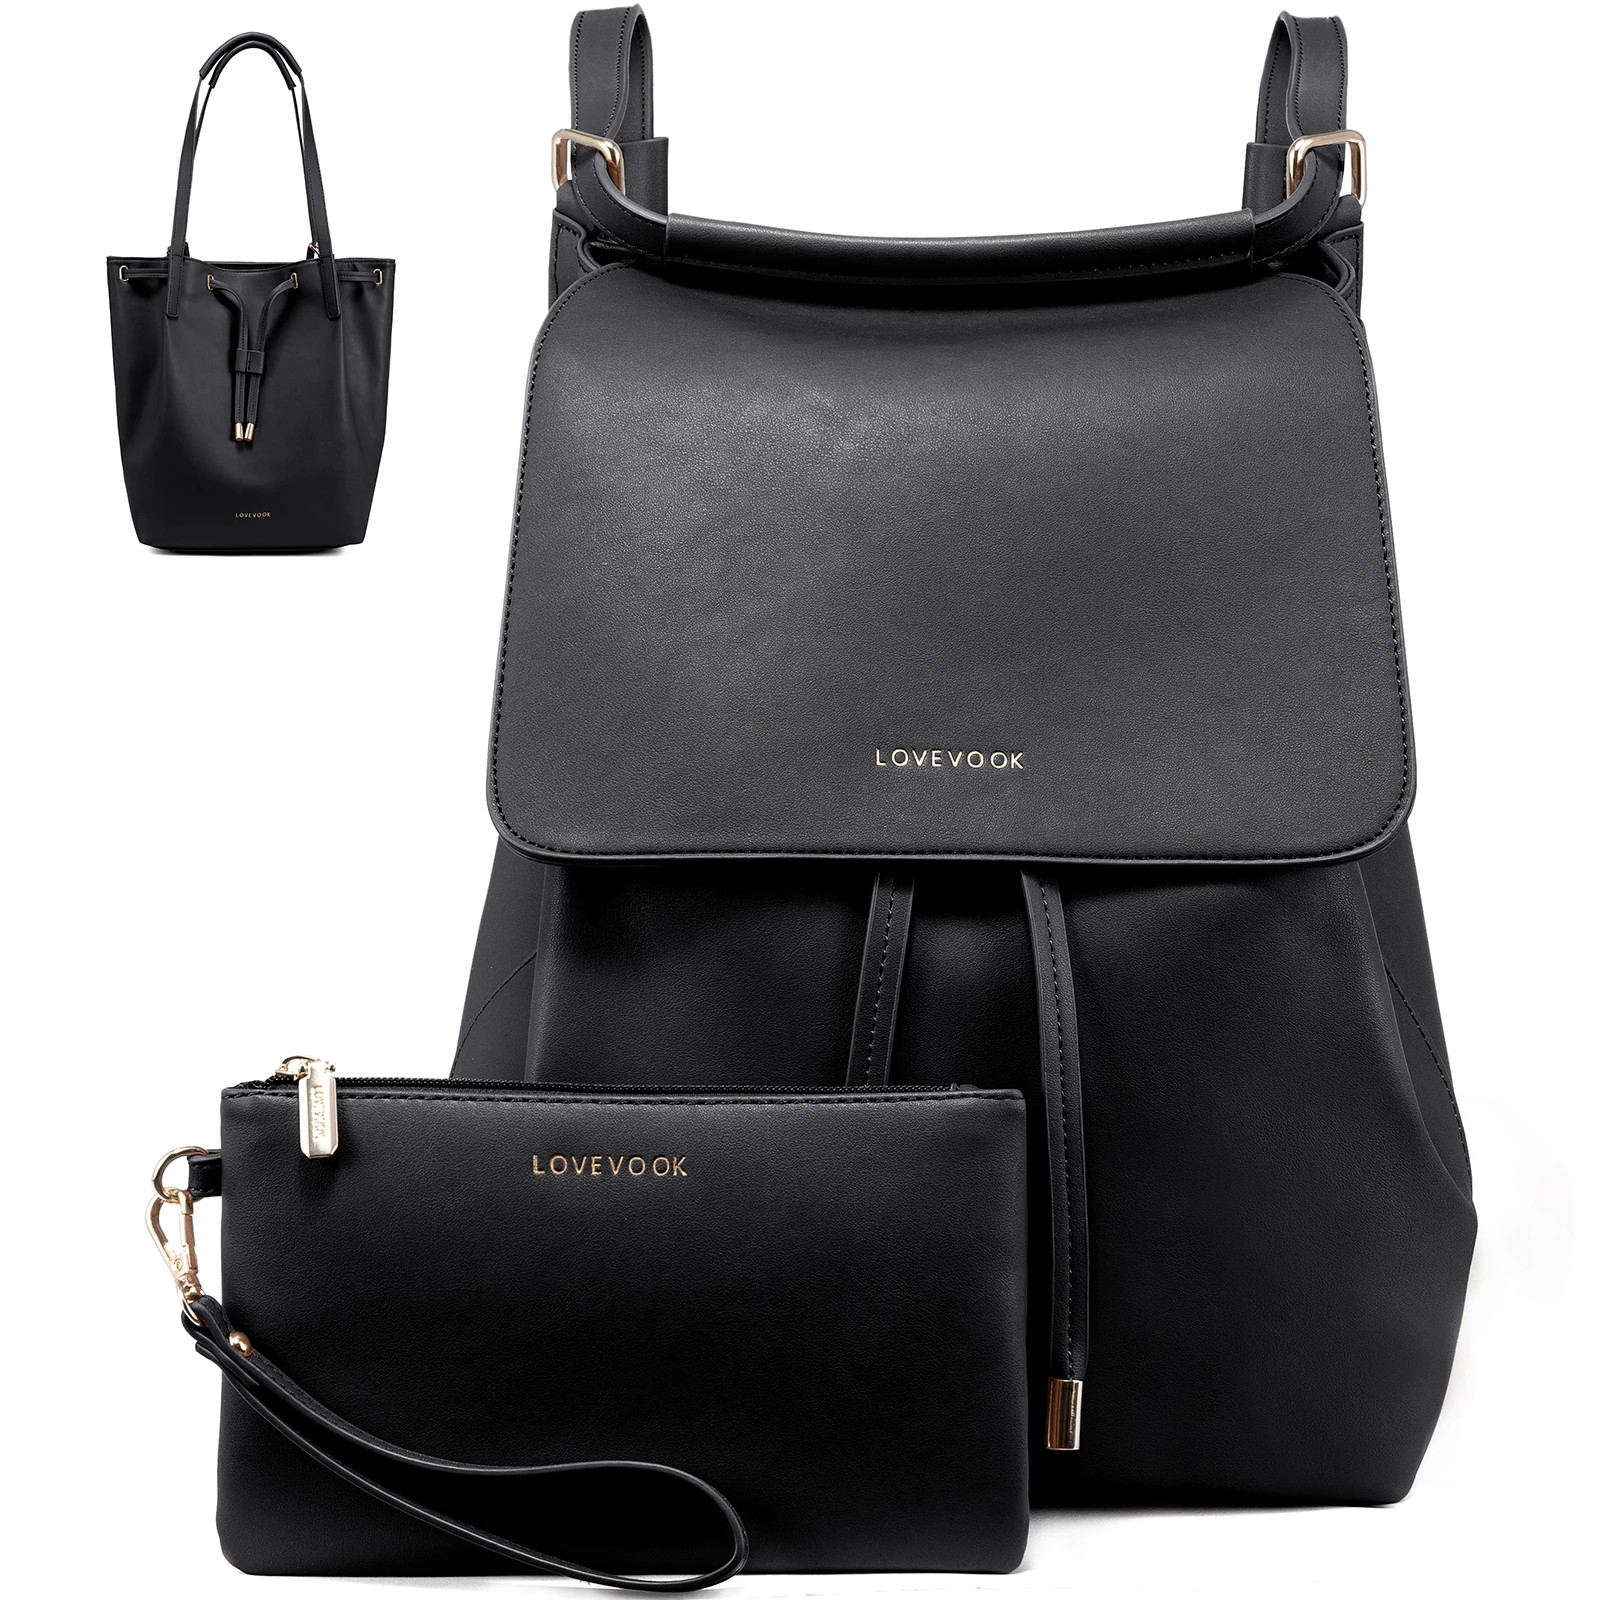 

LOVEVOOK 2pcs/set Fashion Designer Vegan PU Leather Backpack Satchel Bags Convertible Tote Bag Work handbags for women luxury